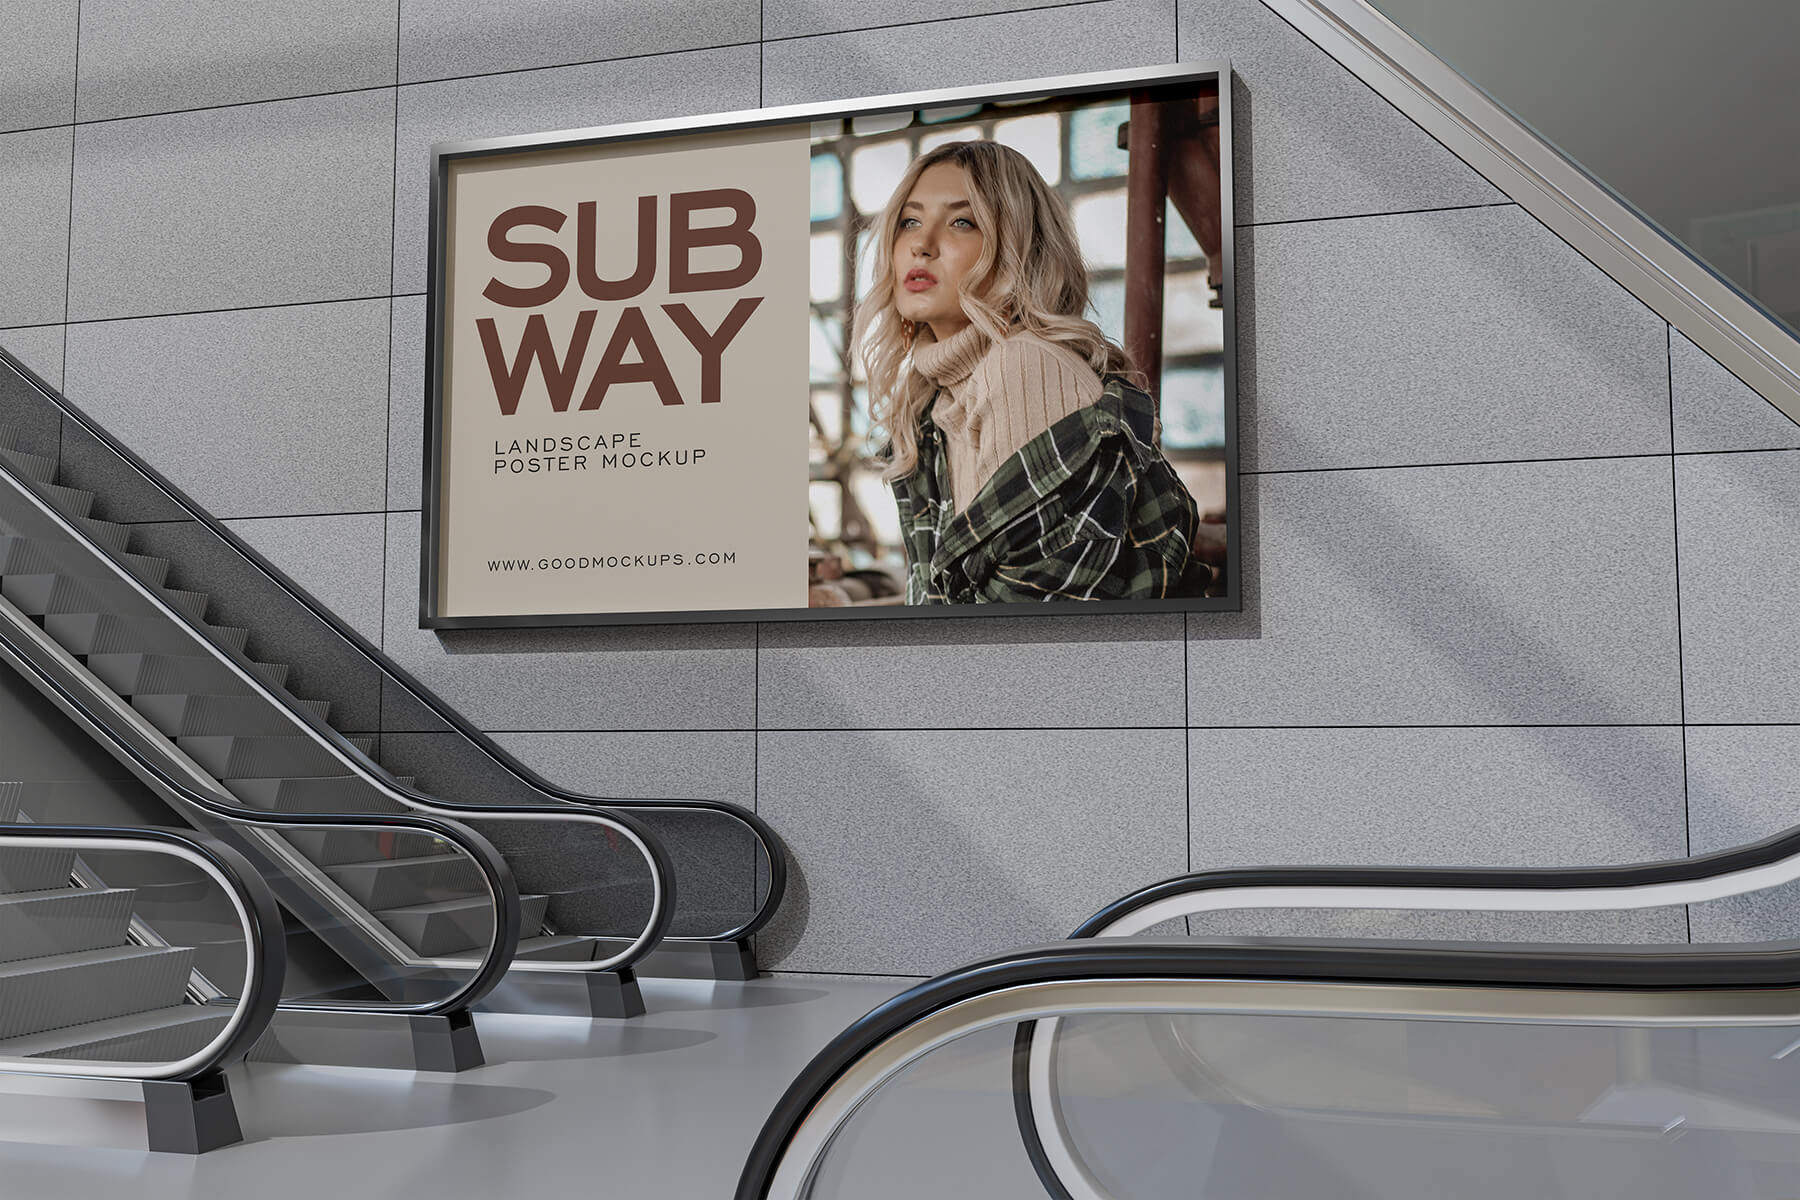 Free-Indoor-Advertising-Subway-Lanscape-Poster-Billboard-Mockup-PSD